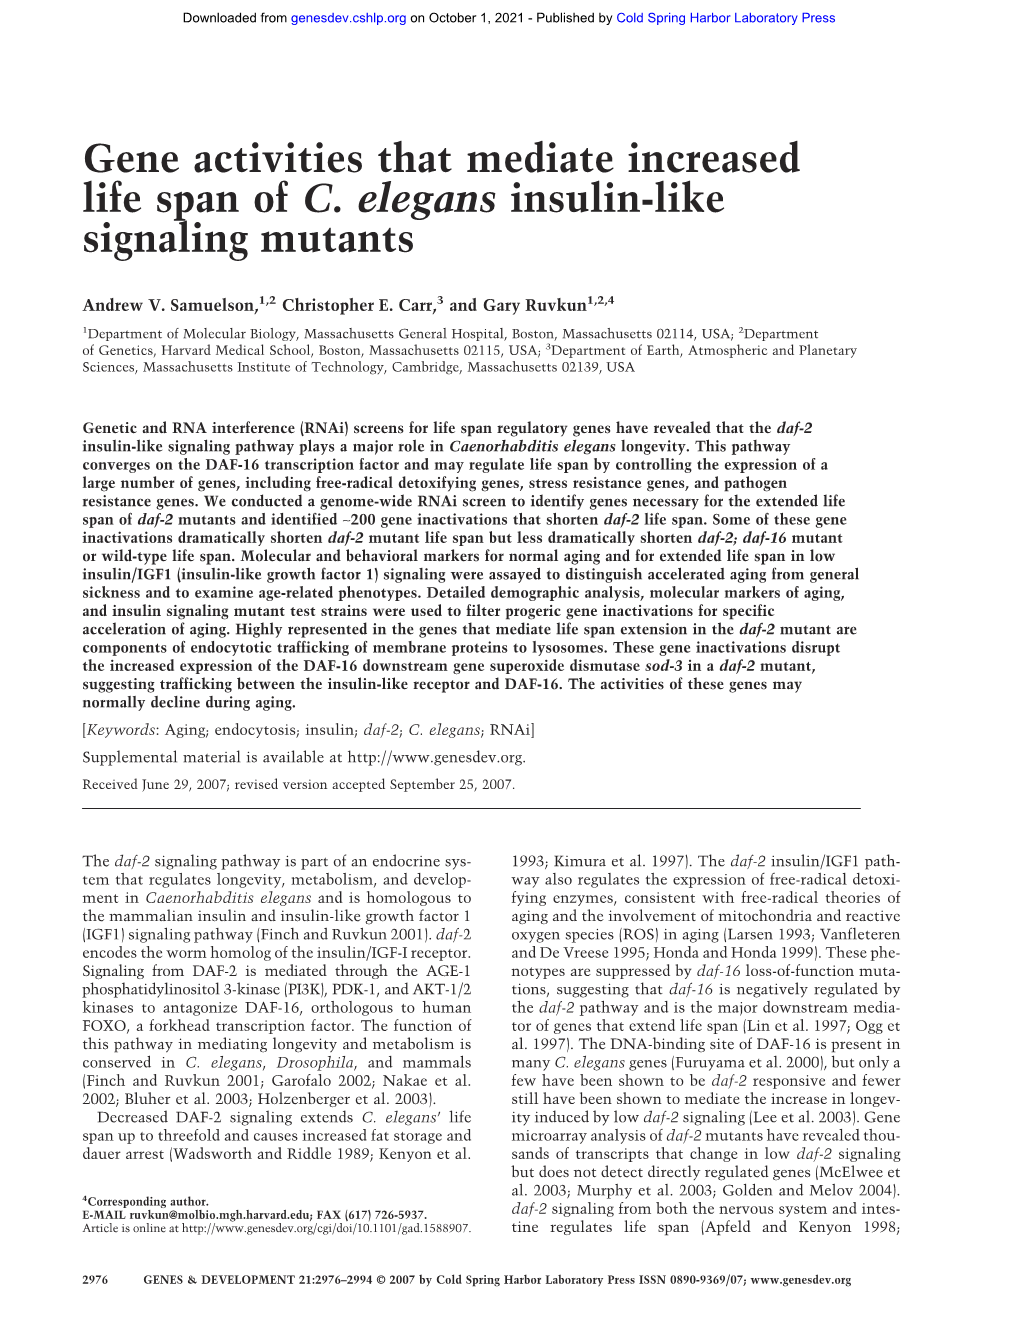 Gene Activities That Mediate Increased Life Span of C. Elegans Insulin-Like Signaling Mutants